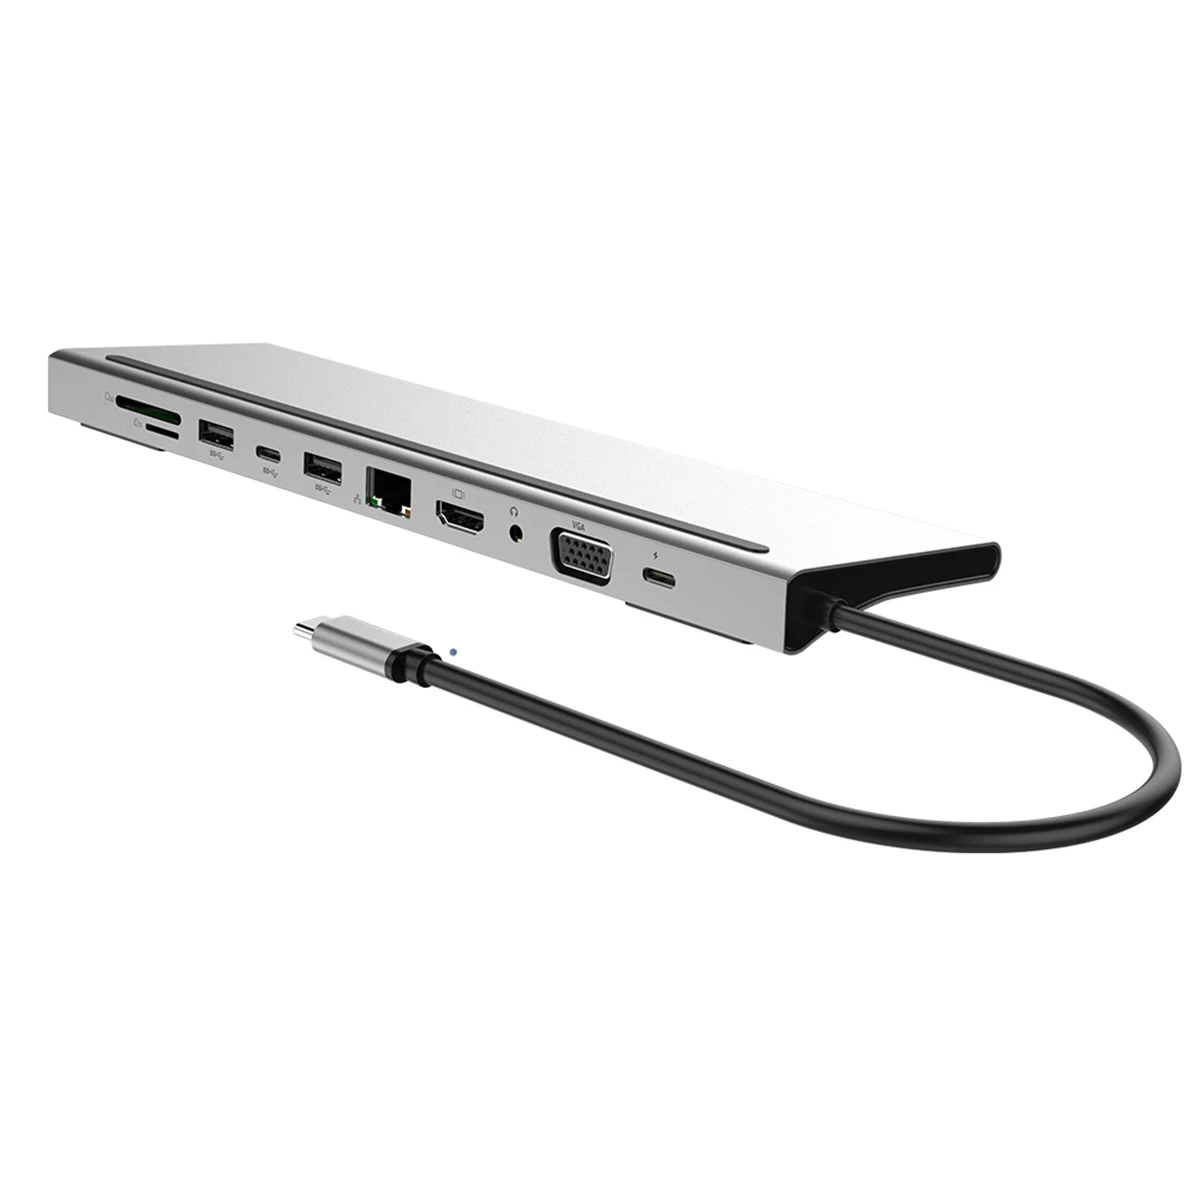 

USB C Hub Type C Adapter 11 in 1 87w Charger Port 4K HD, VGA SD TF Card Reader 4 USB3.0 Ports